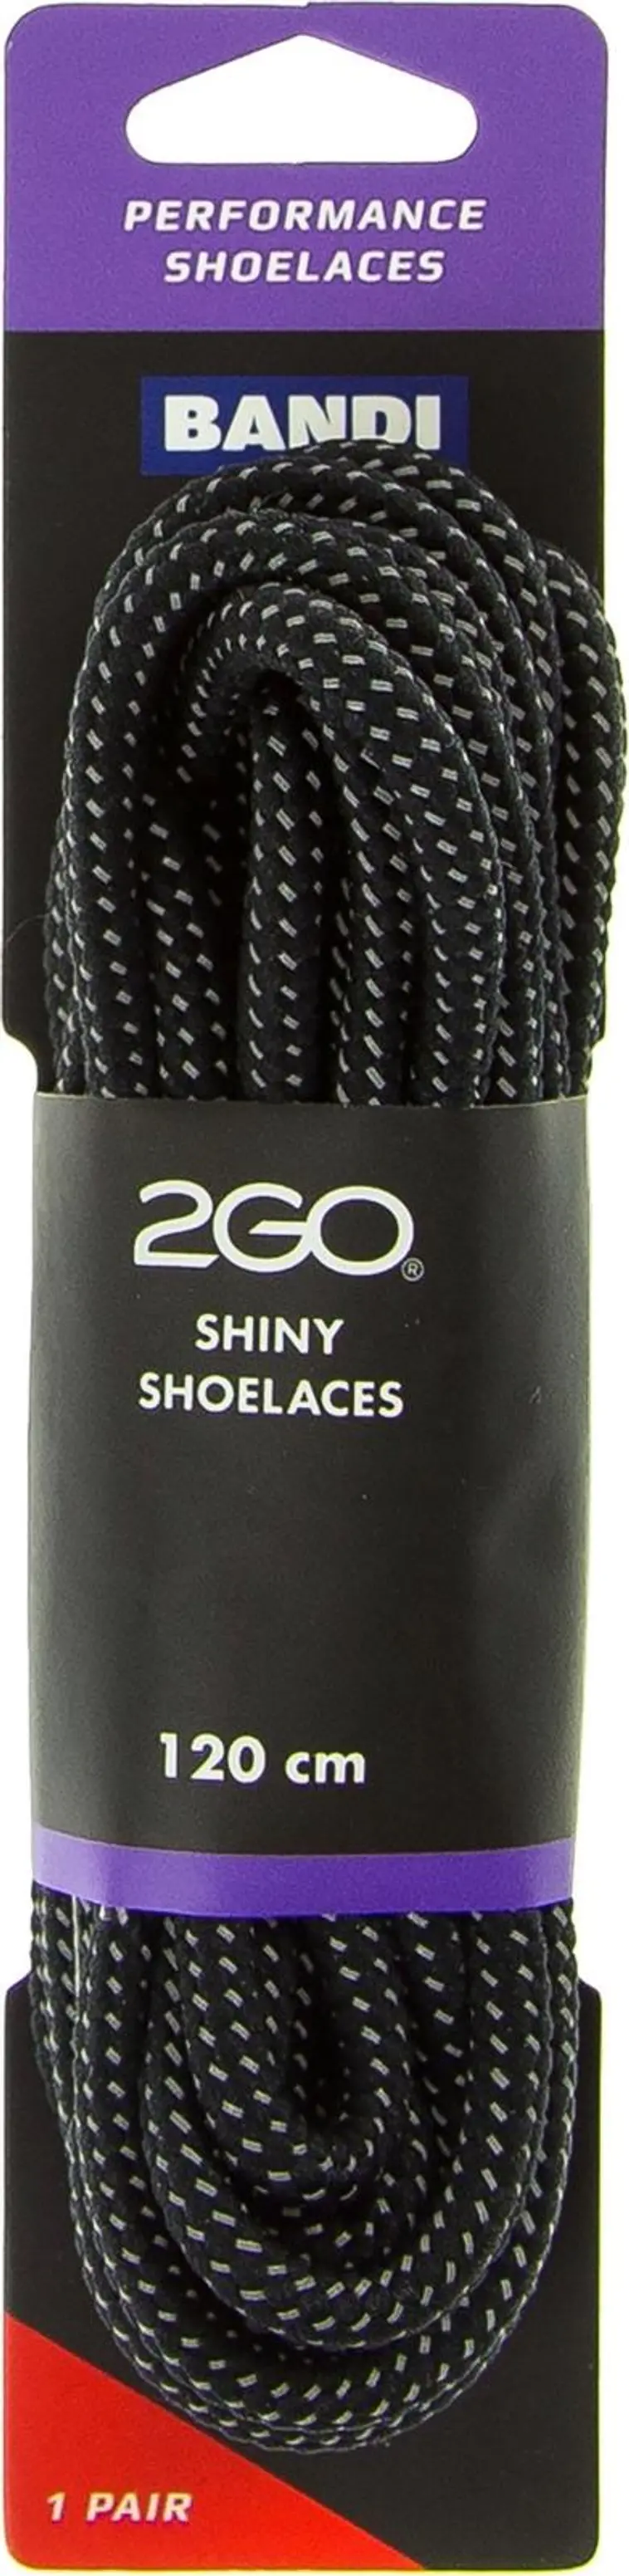 Bandi 2GO heijastavat kengännauhat 120 cm musta